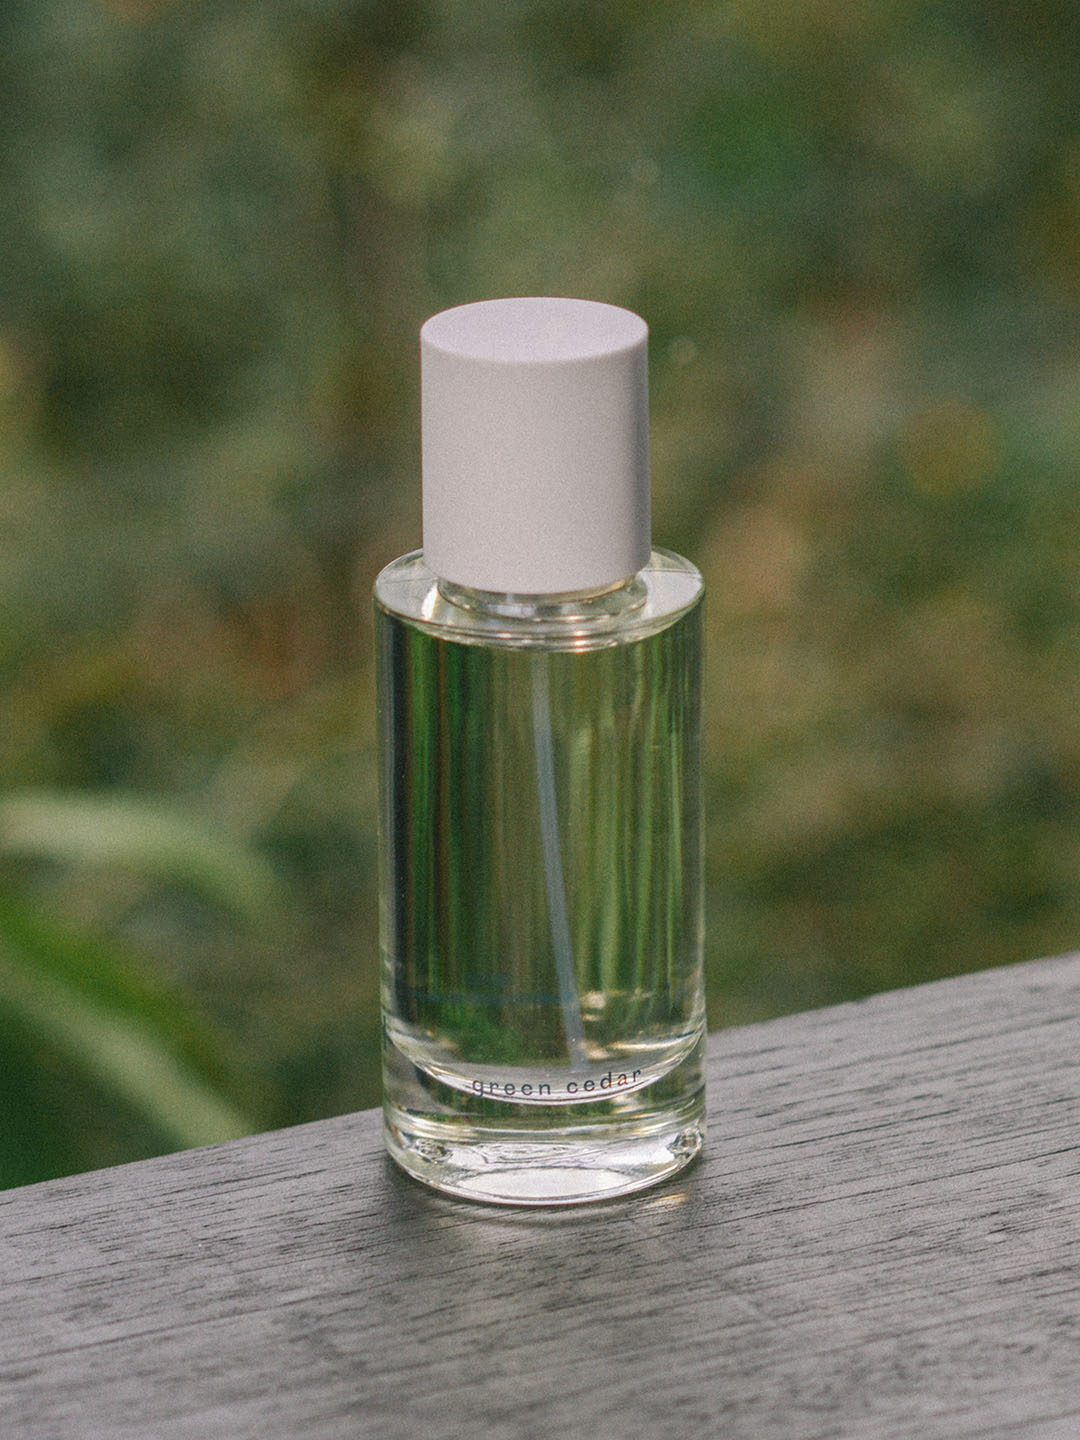 A bottle of Green Cedar – velvety, rich wood eau de parfum by Abel, made with Atlas Mountain cedar, sitting on a wooden table.